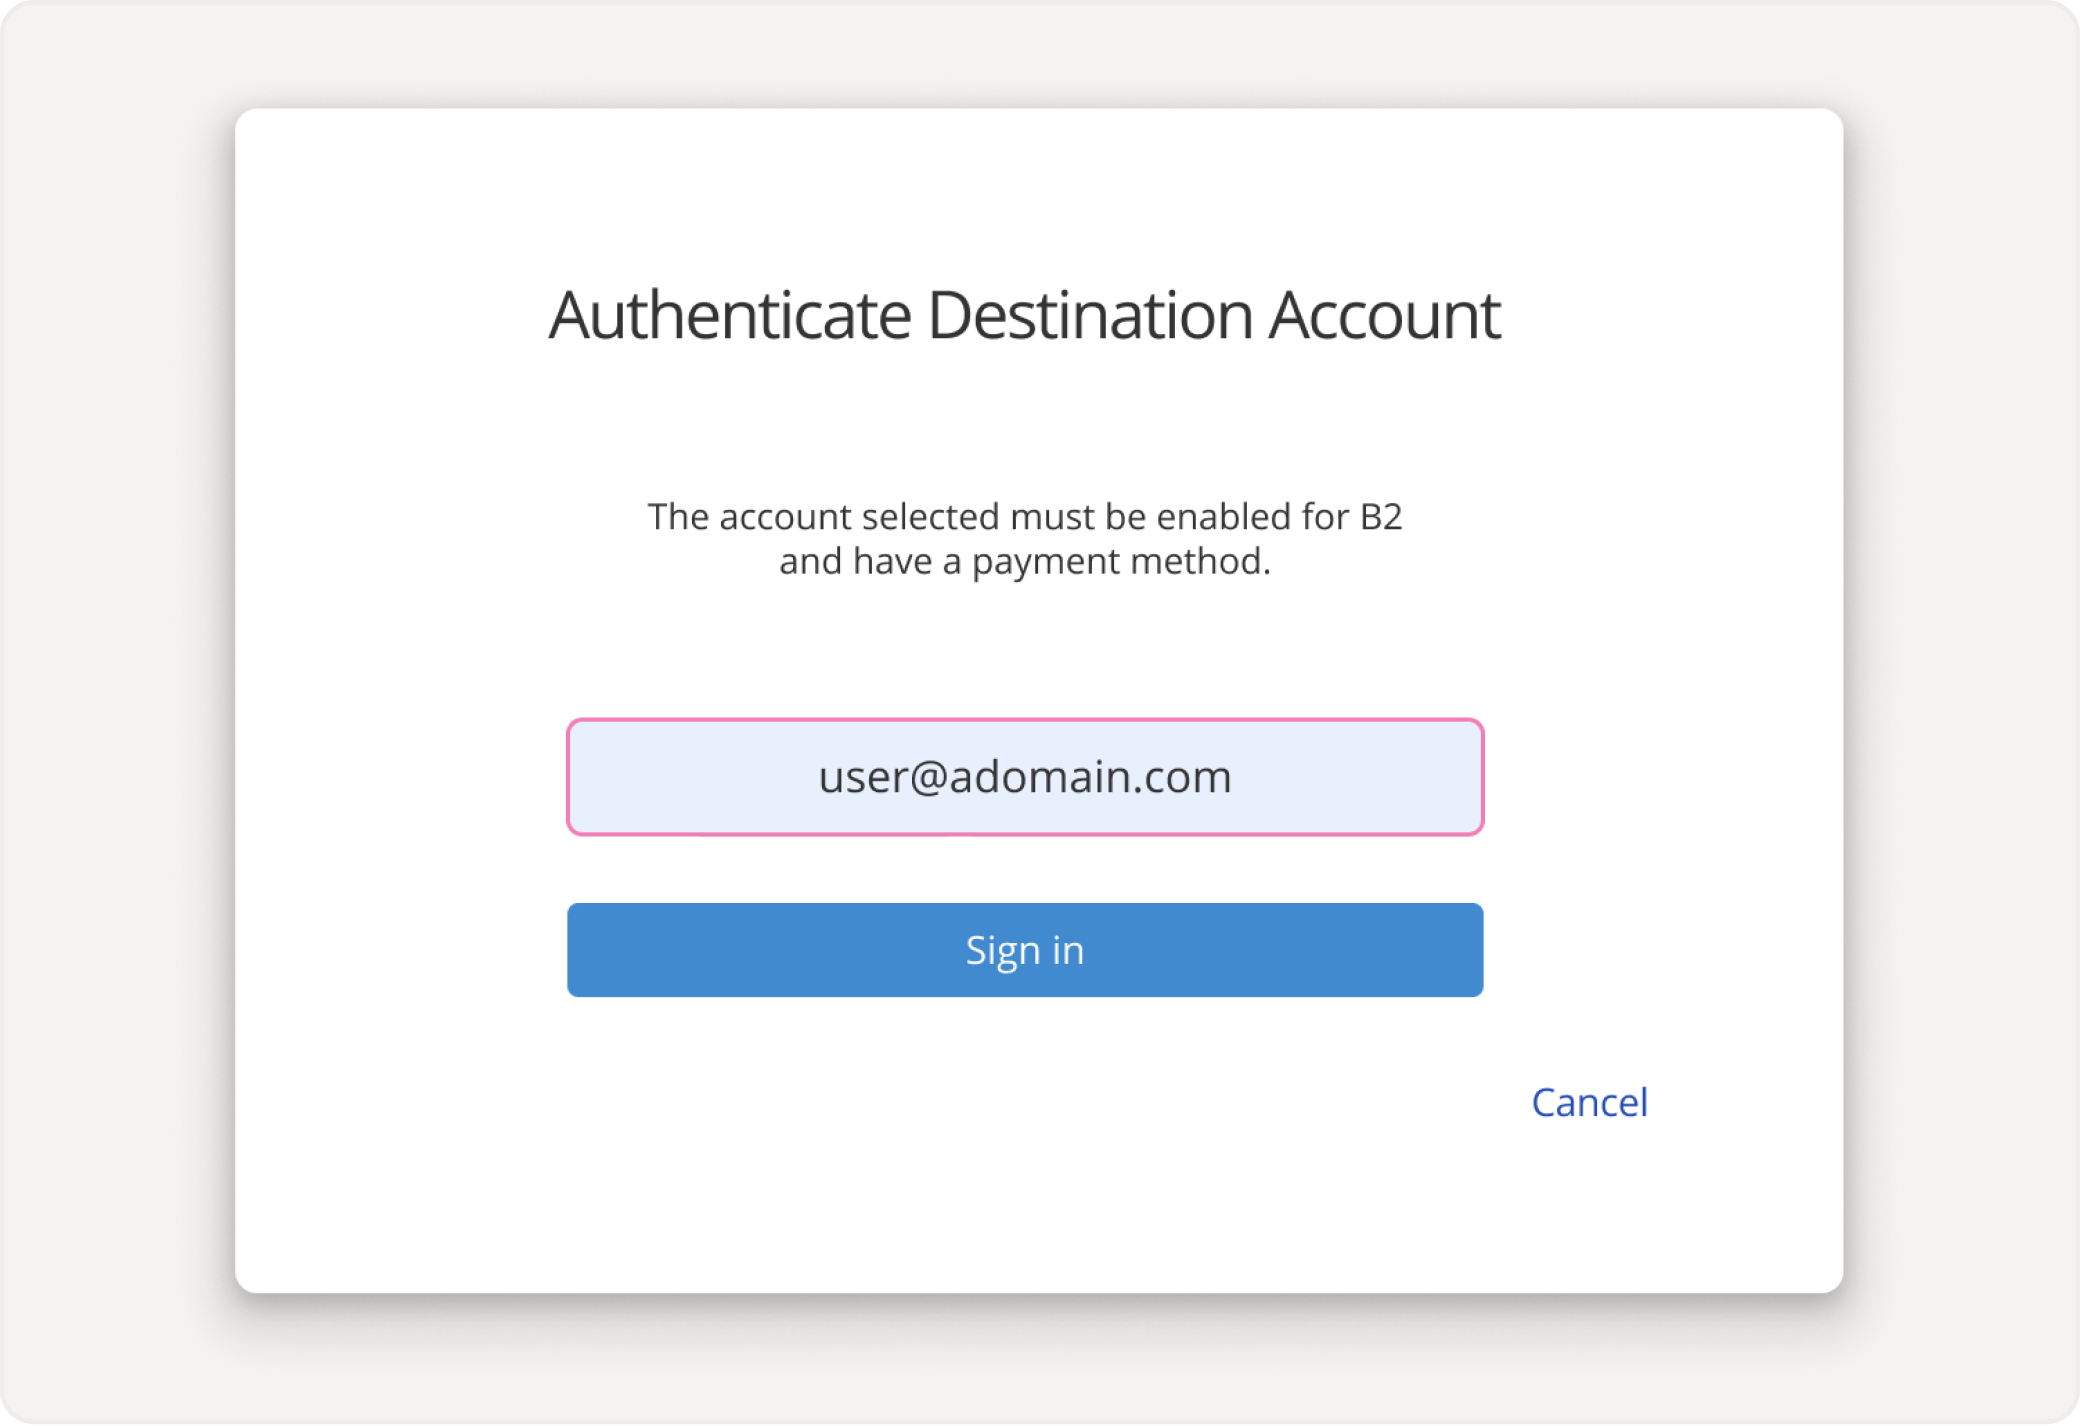 bb-cloudrep-screenshot-authenticatingdesaccnt.png